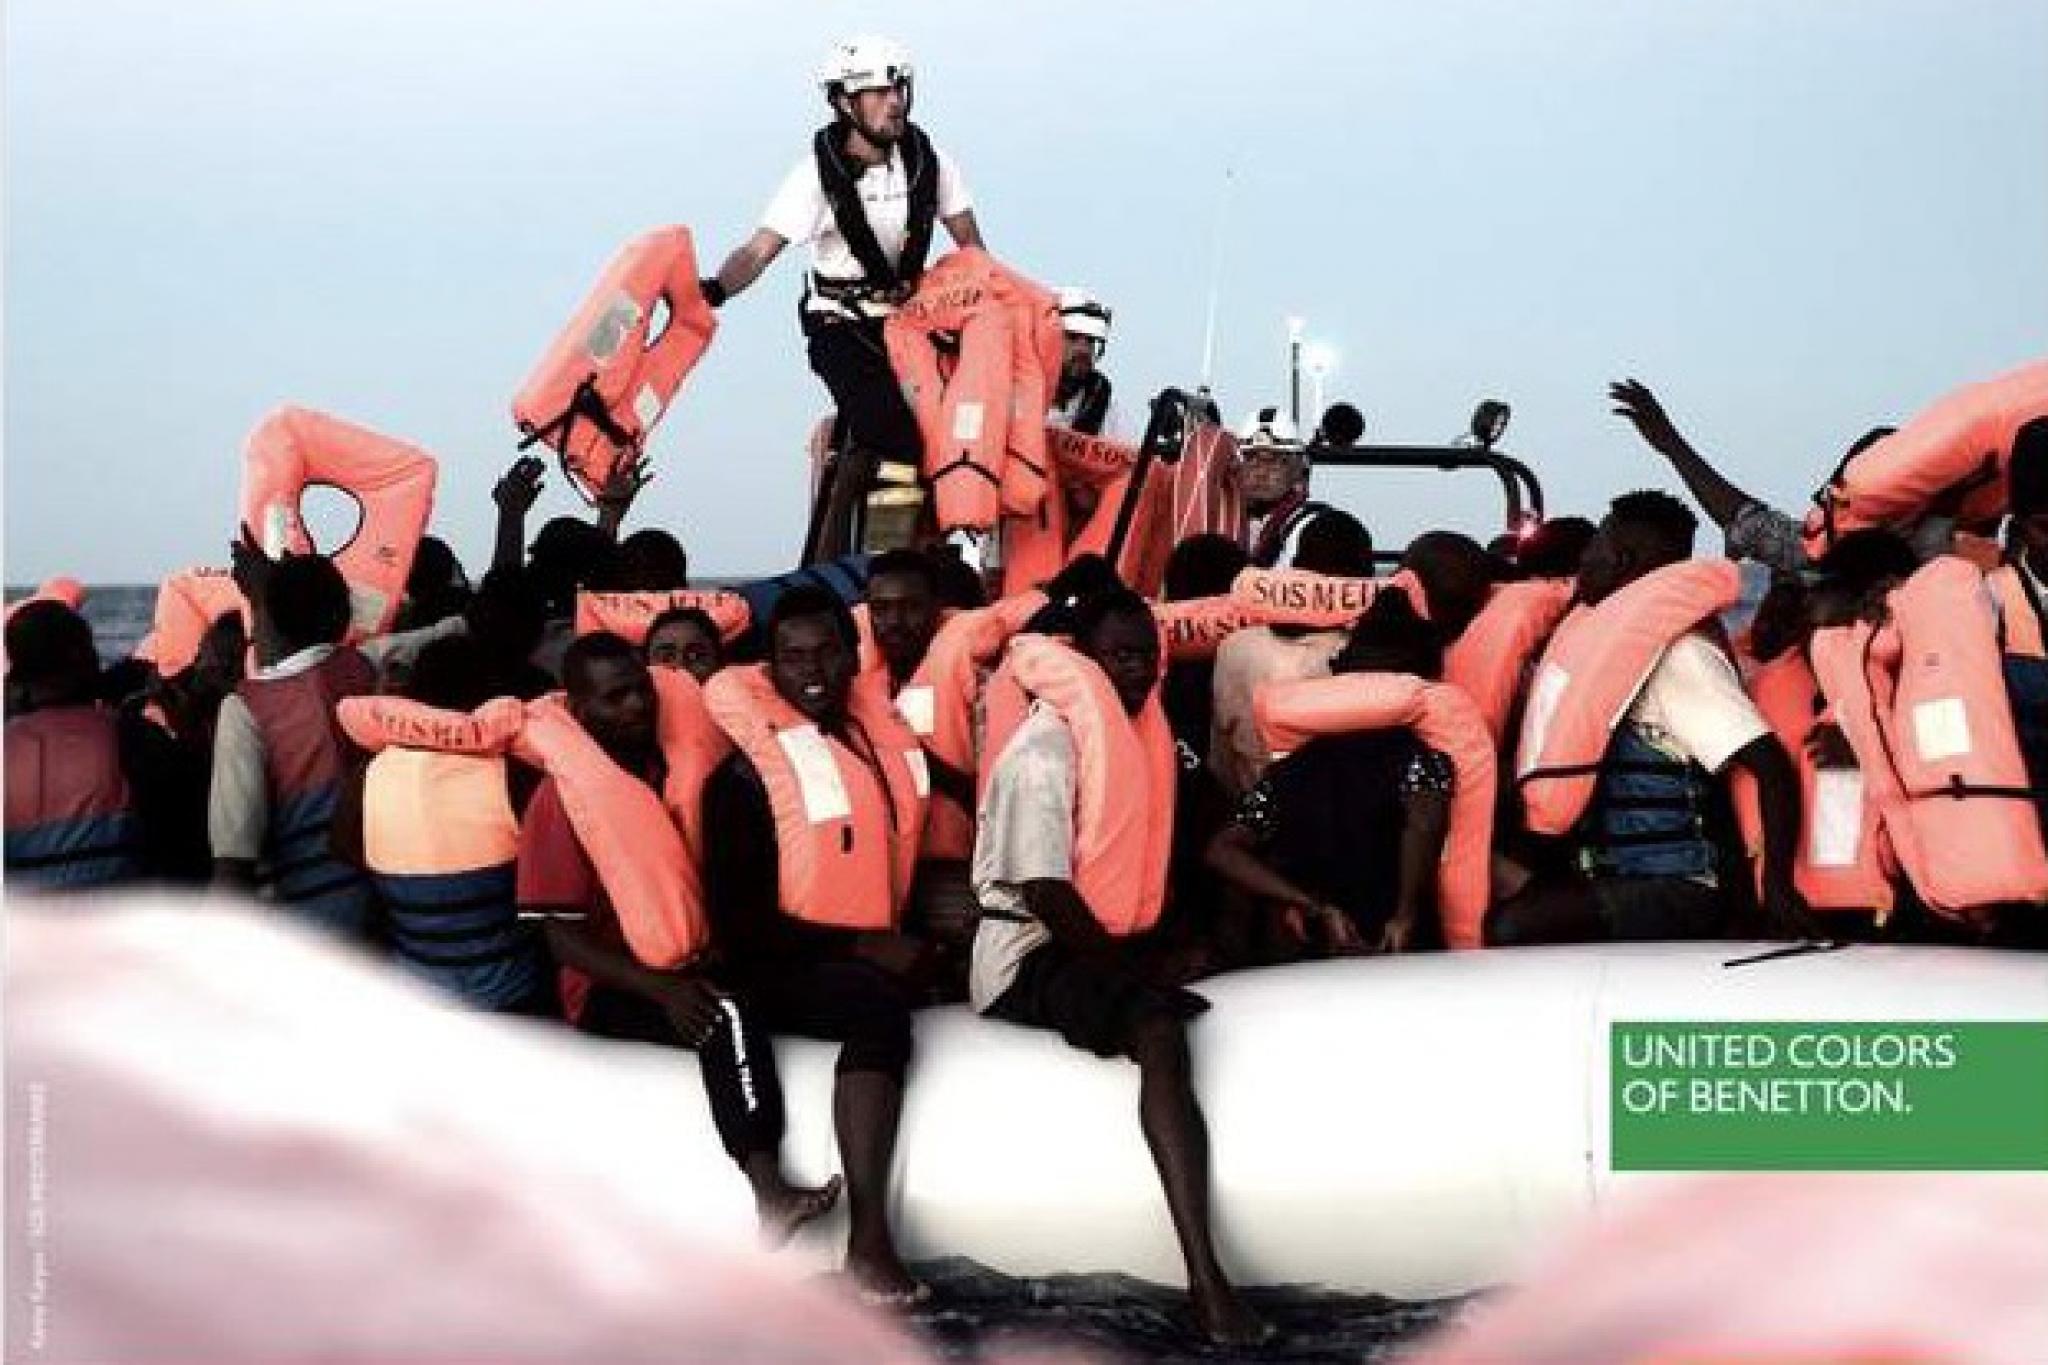 arm Autonoom Duplicaat Photos of refugees advertise Benetton